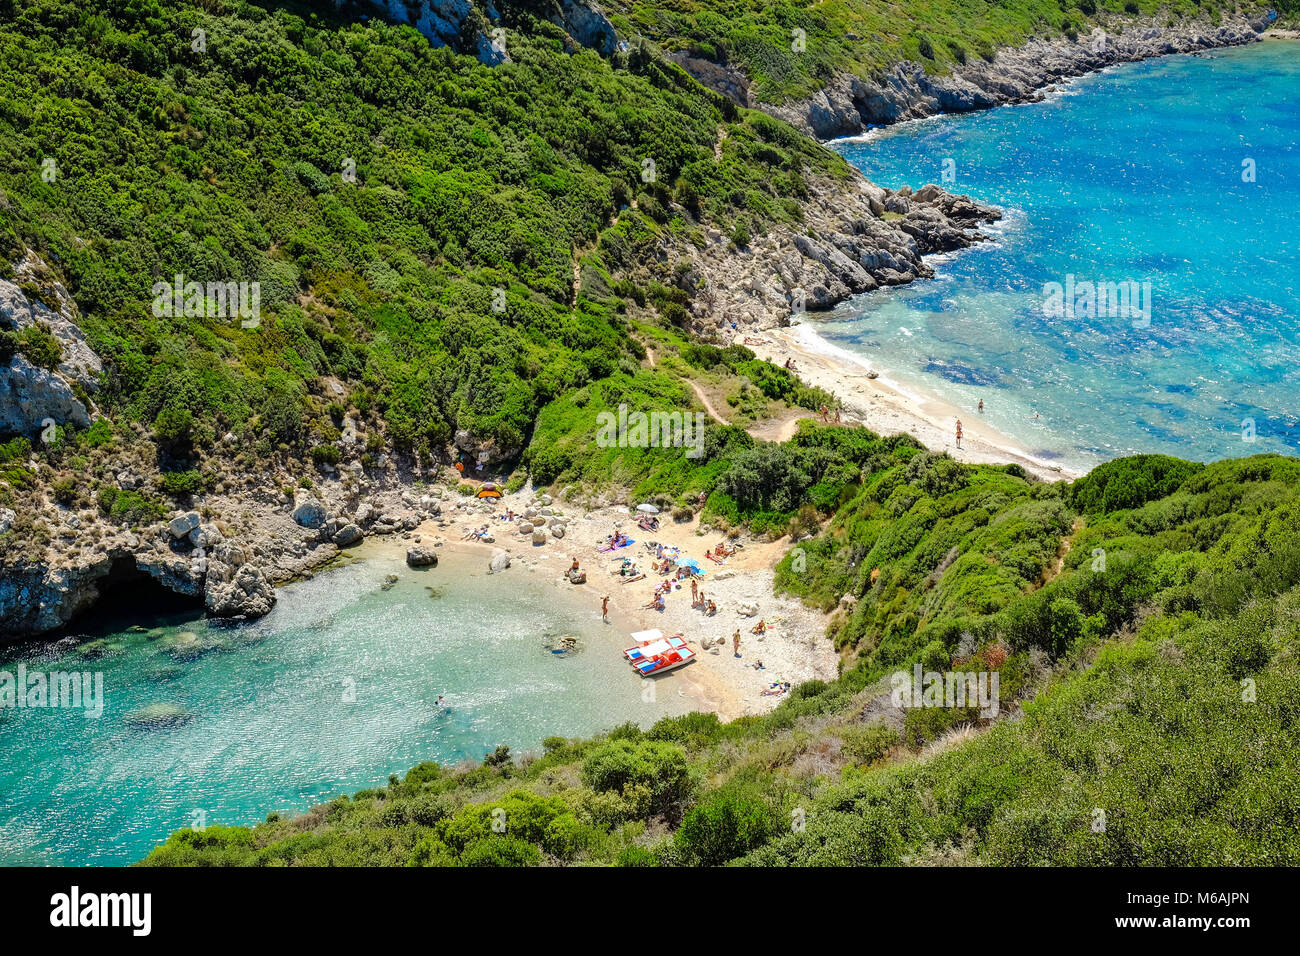 Porto-Timoni, the most famous and beautifull beach in Corfu island, Greece. Important tourist attraction. Stock Photo